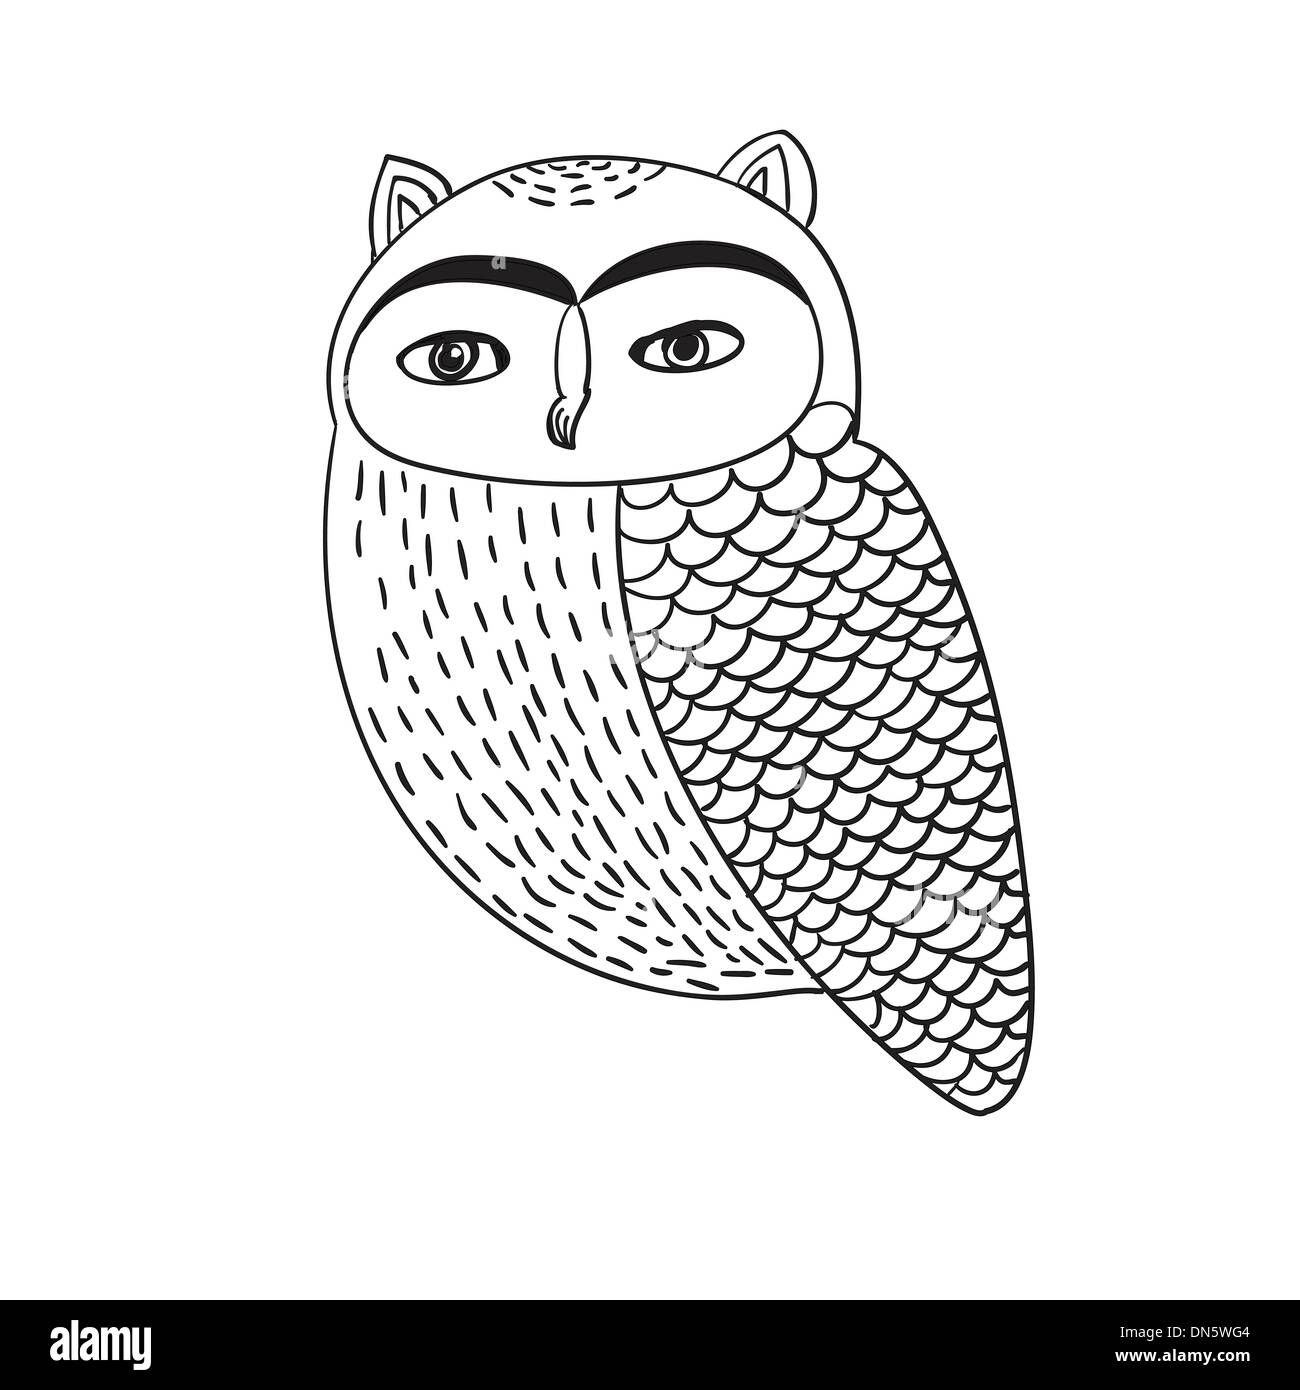 Cute hand drawn owl bird illustration Stock Vector